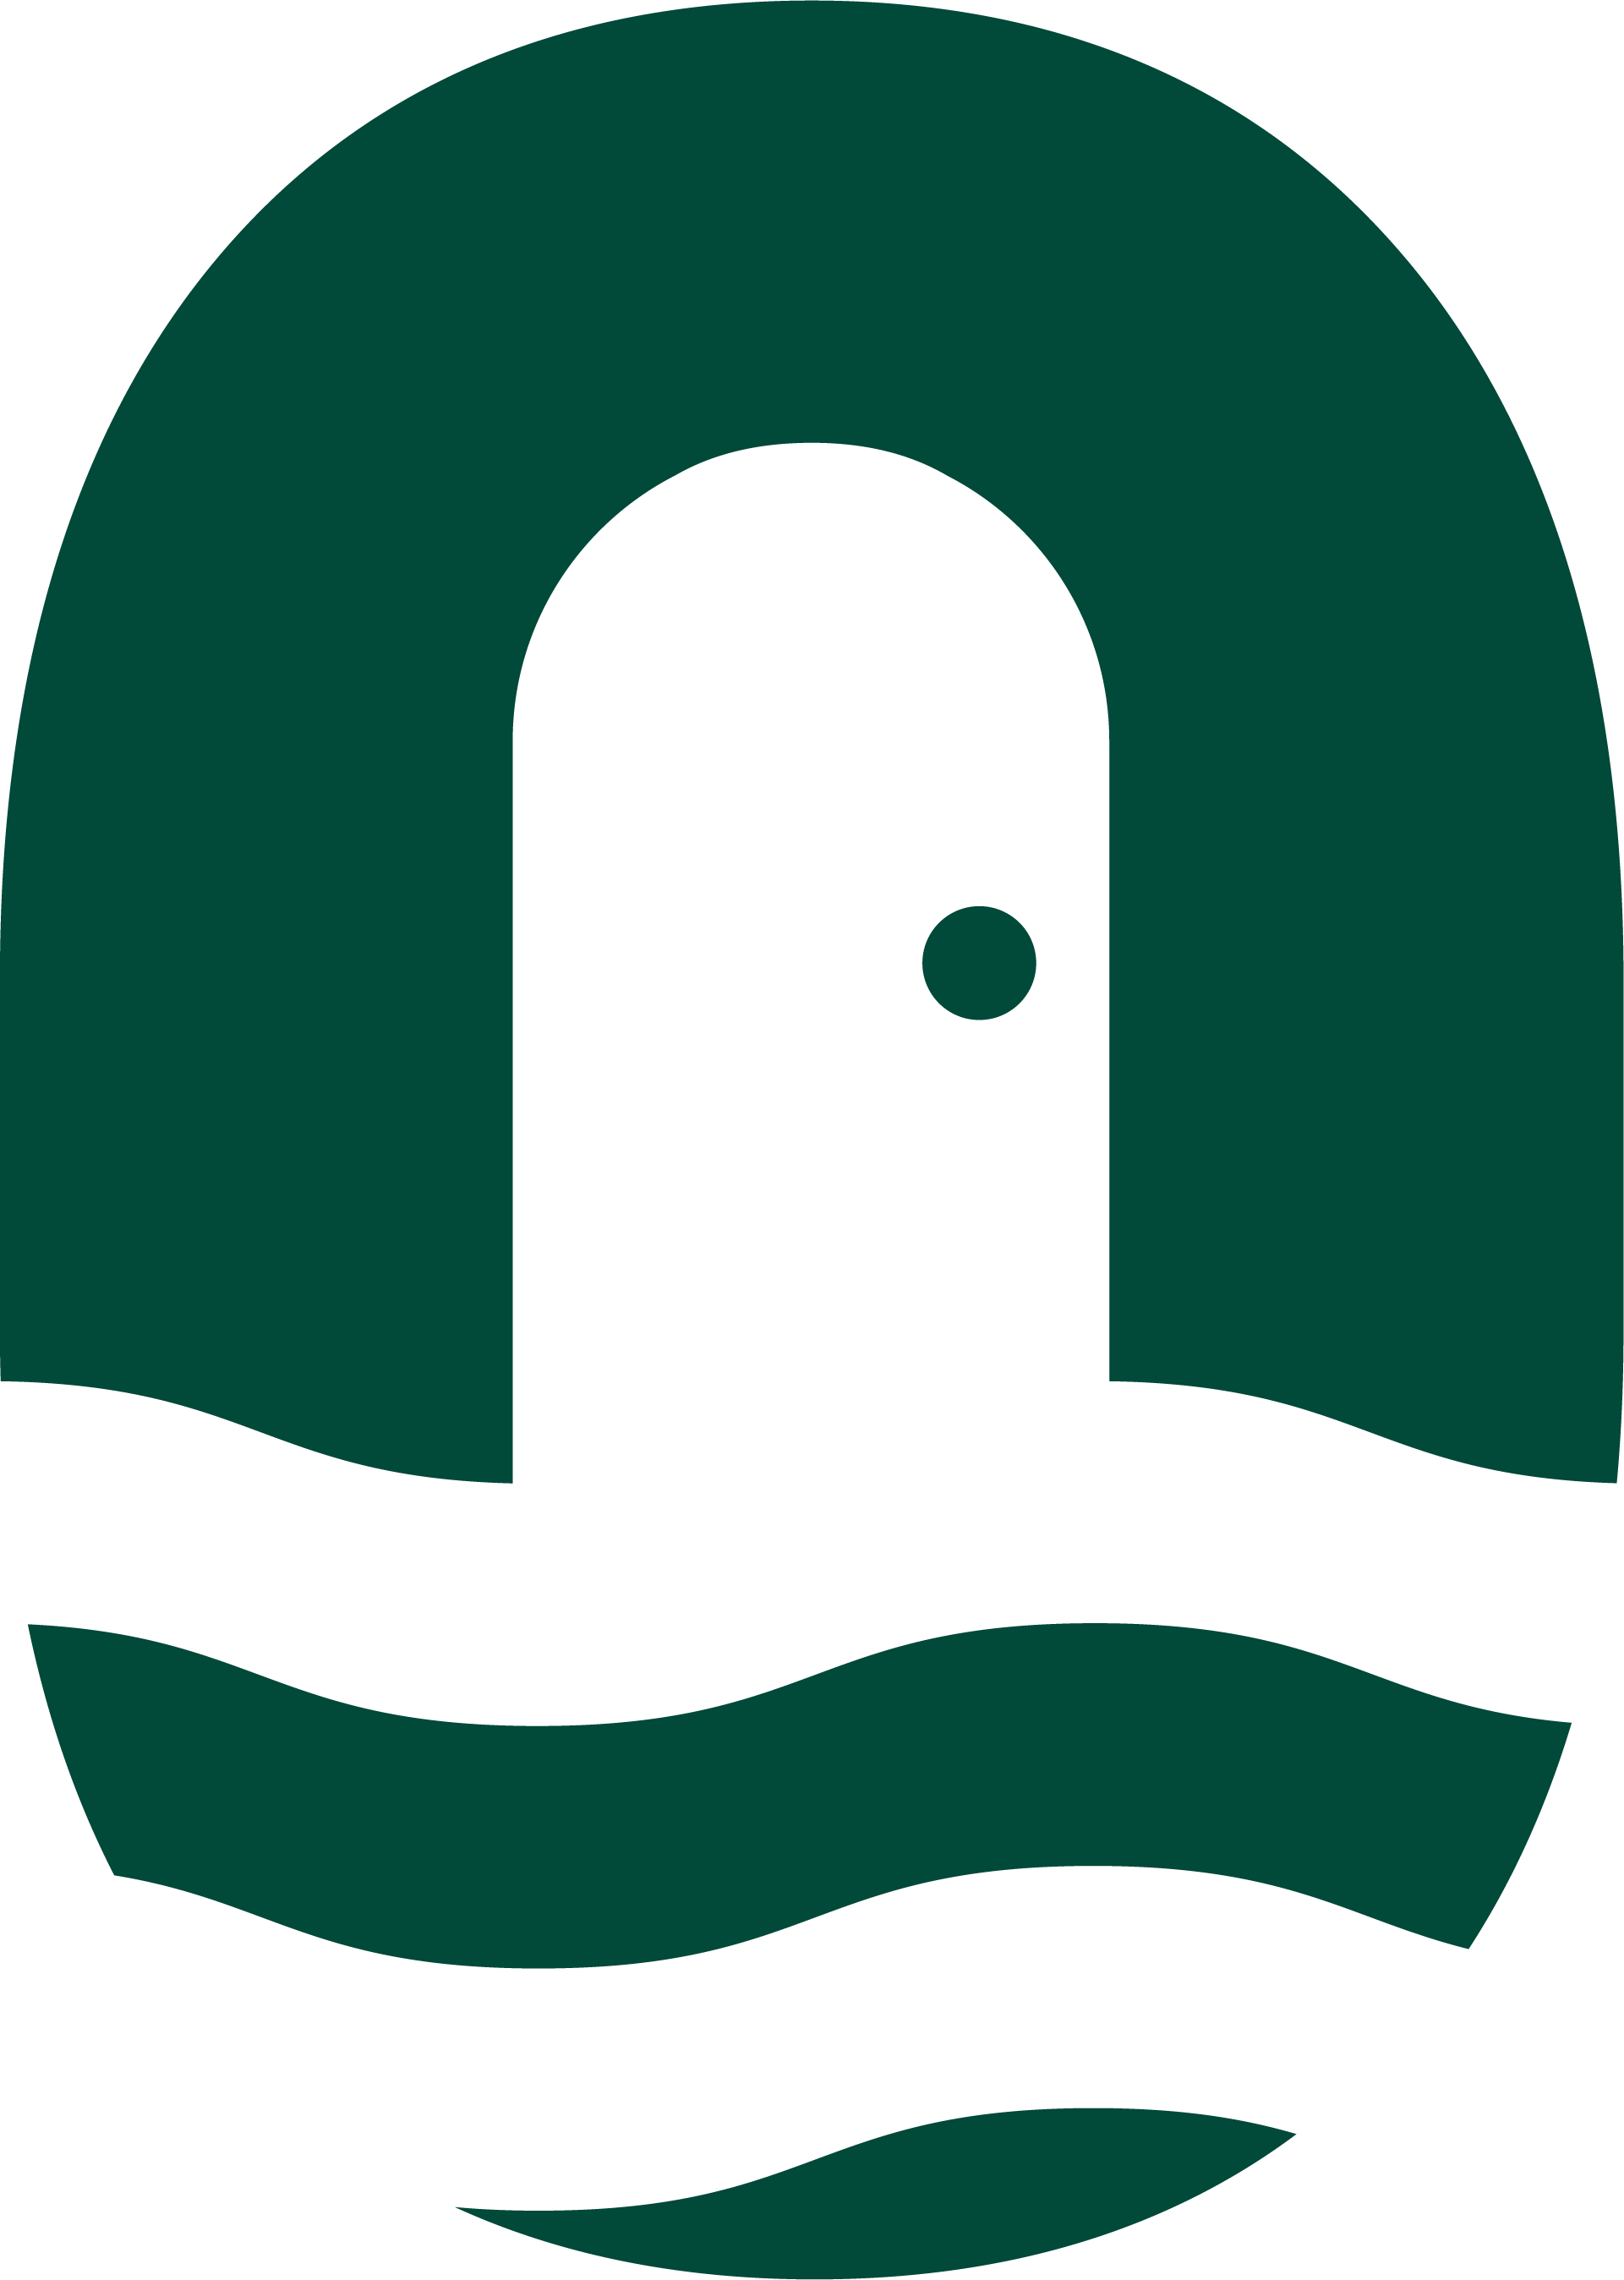 House of Seaweed logo